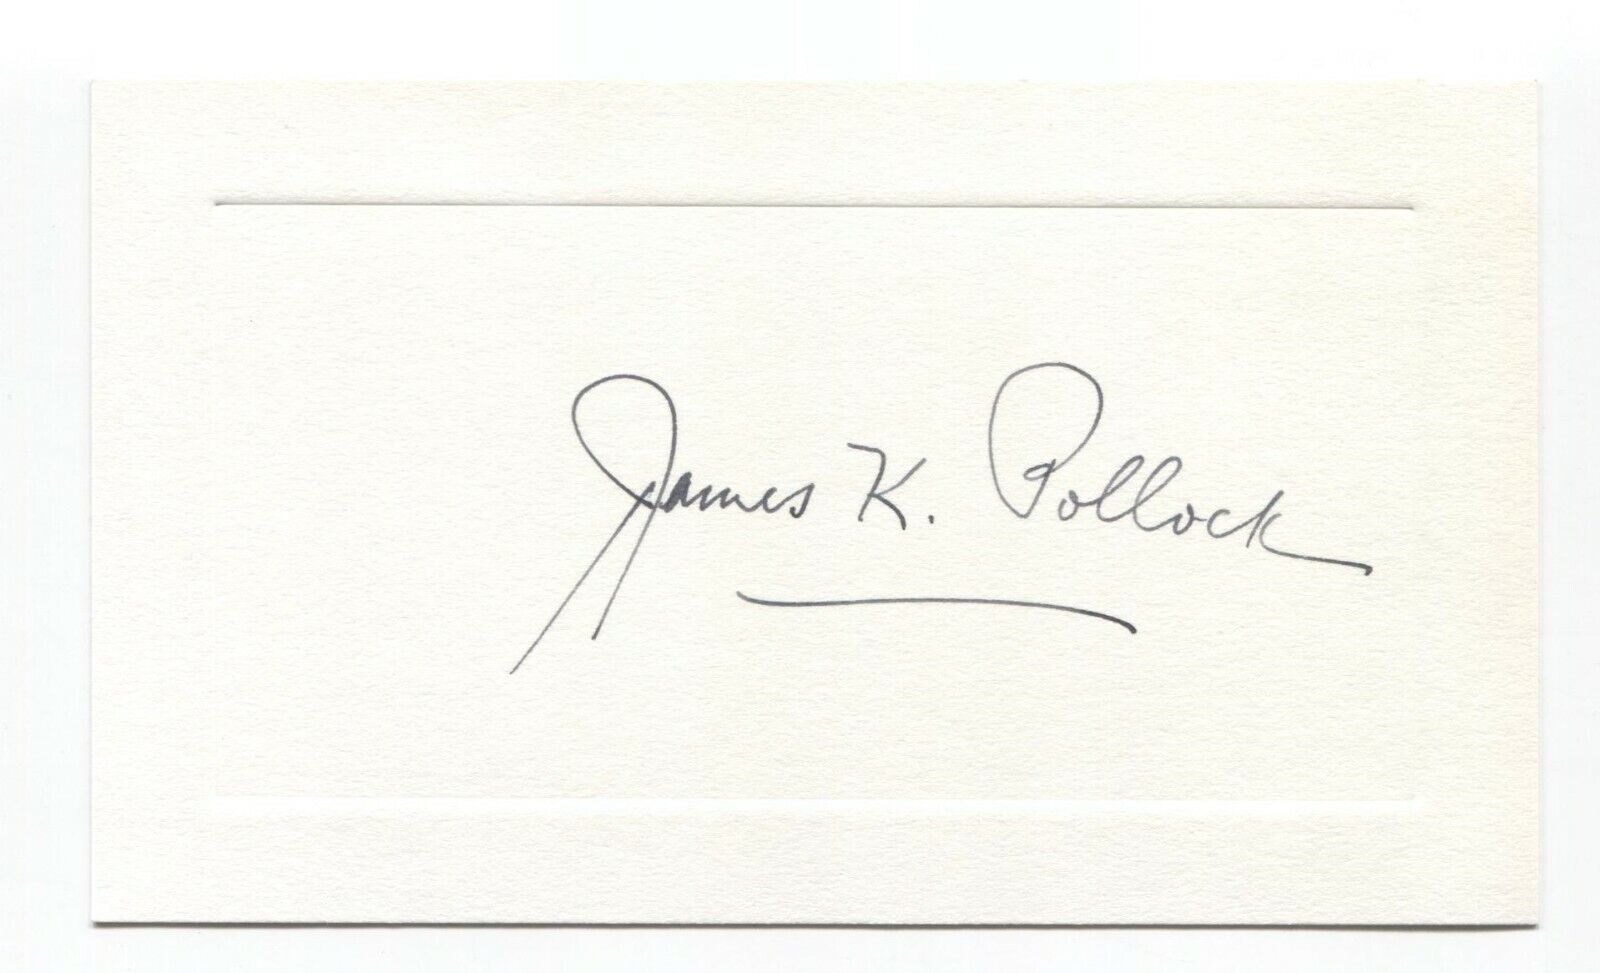 James K. Pollock Signed Card Autographed Signature Political Scientist